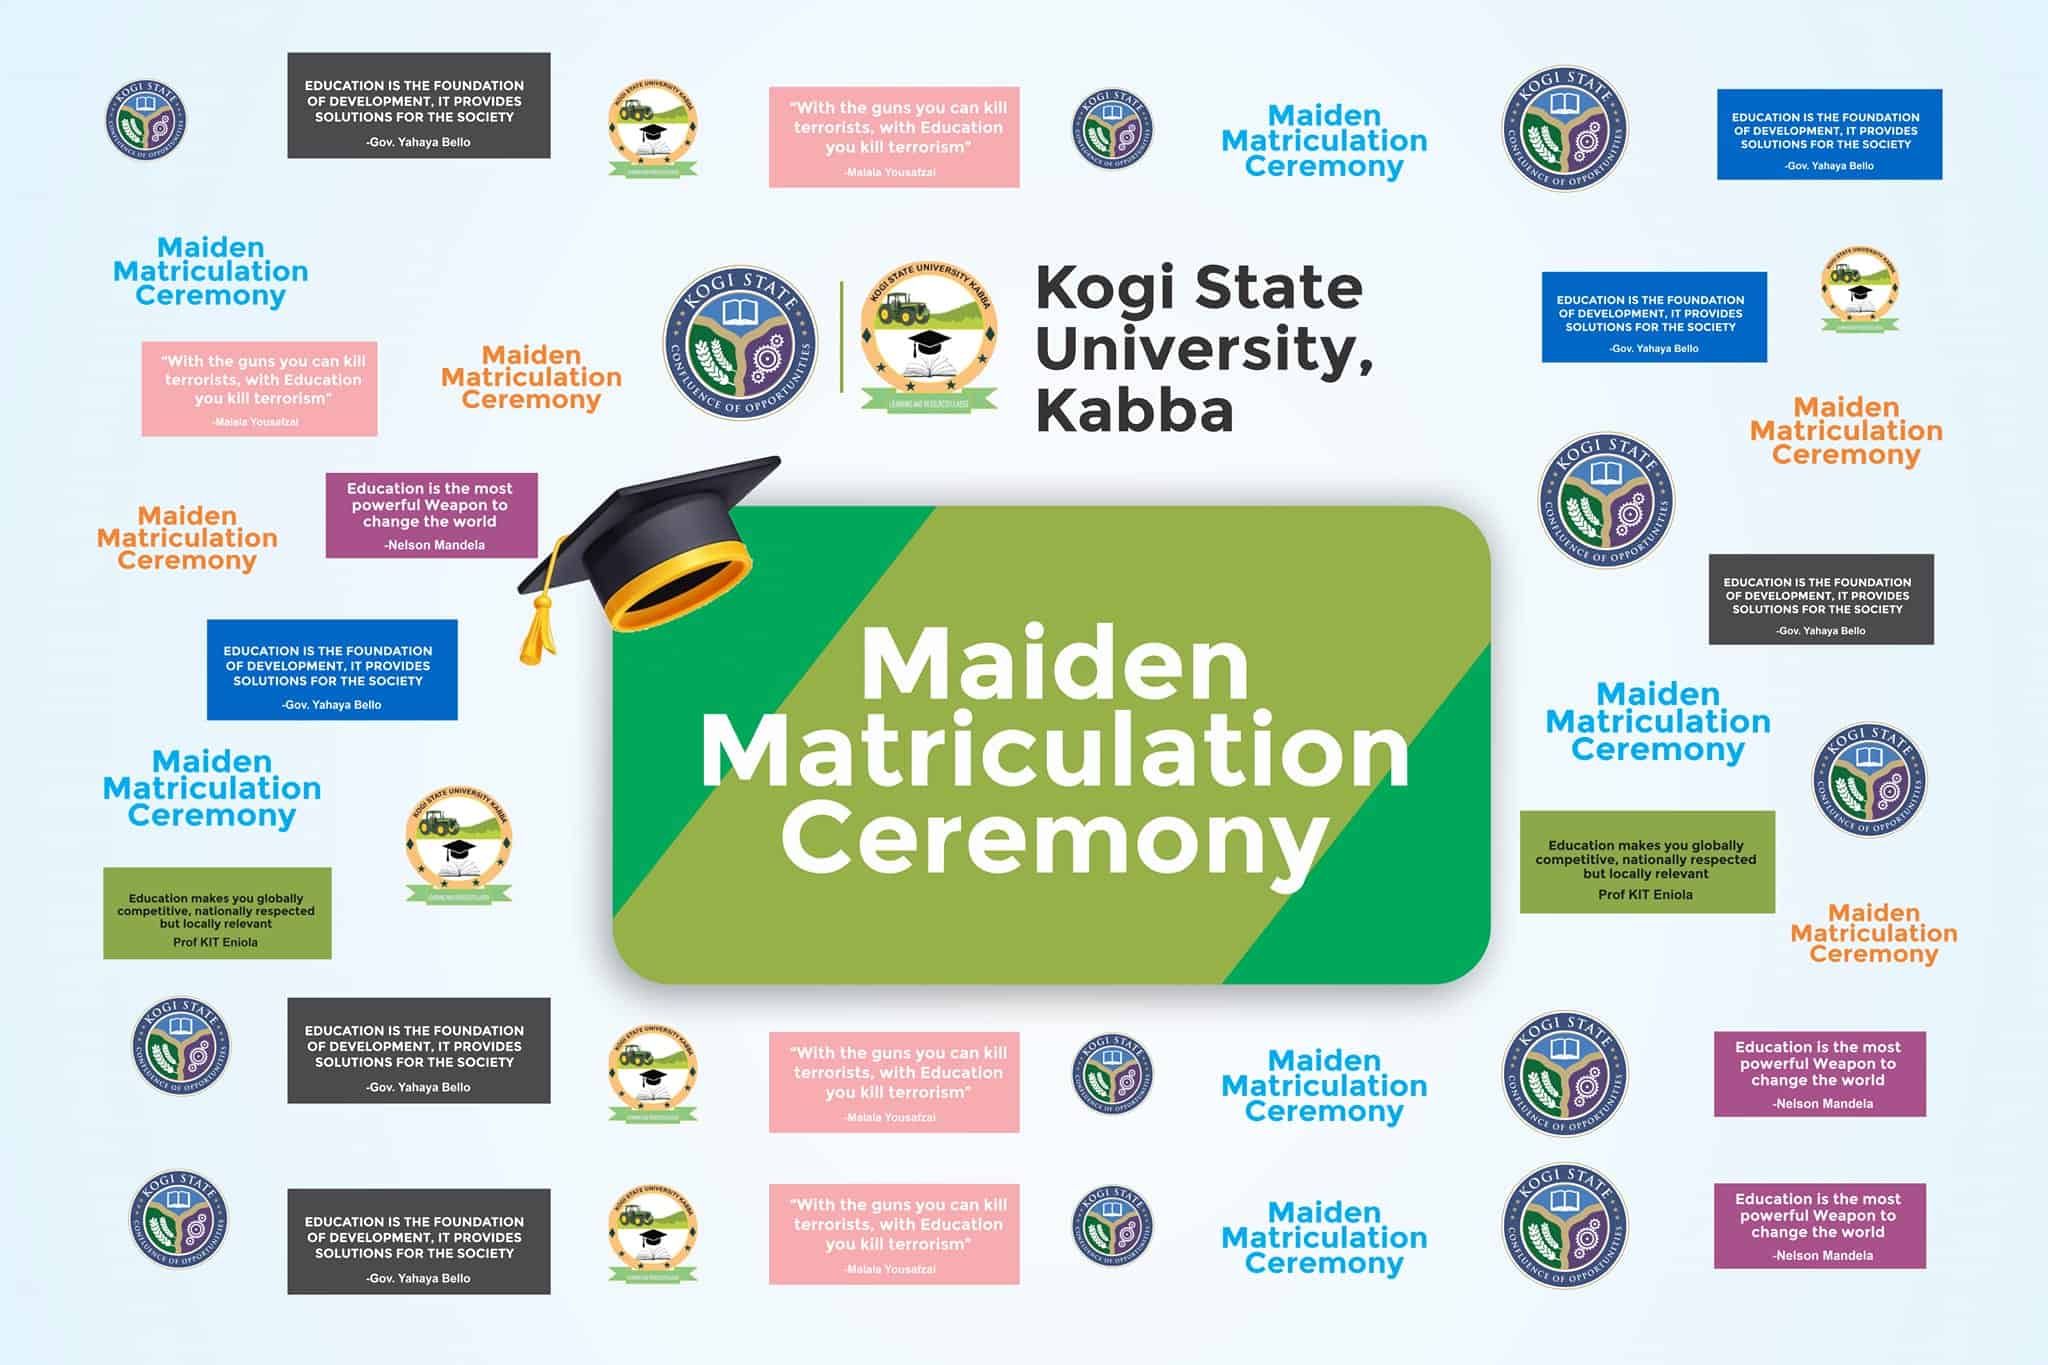 KSU Kabba Maiden Matriculation Ceremony 2023/2024